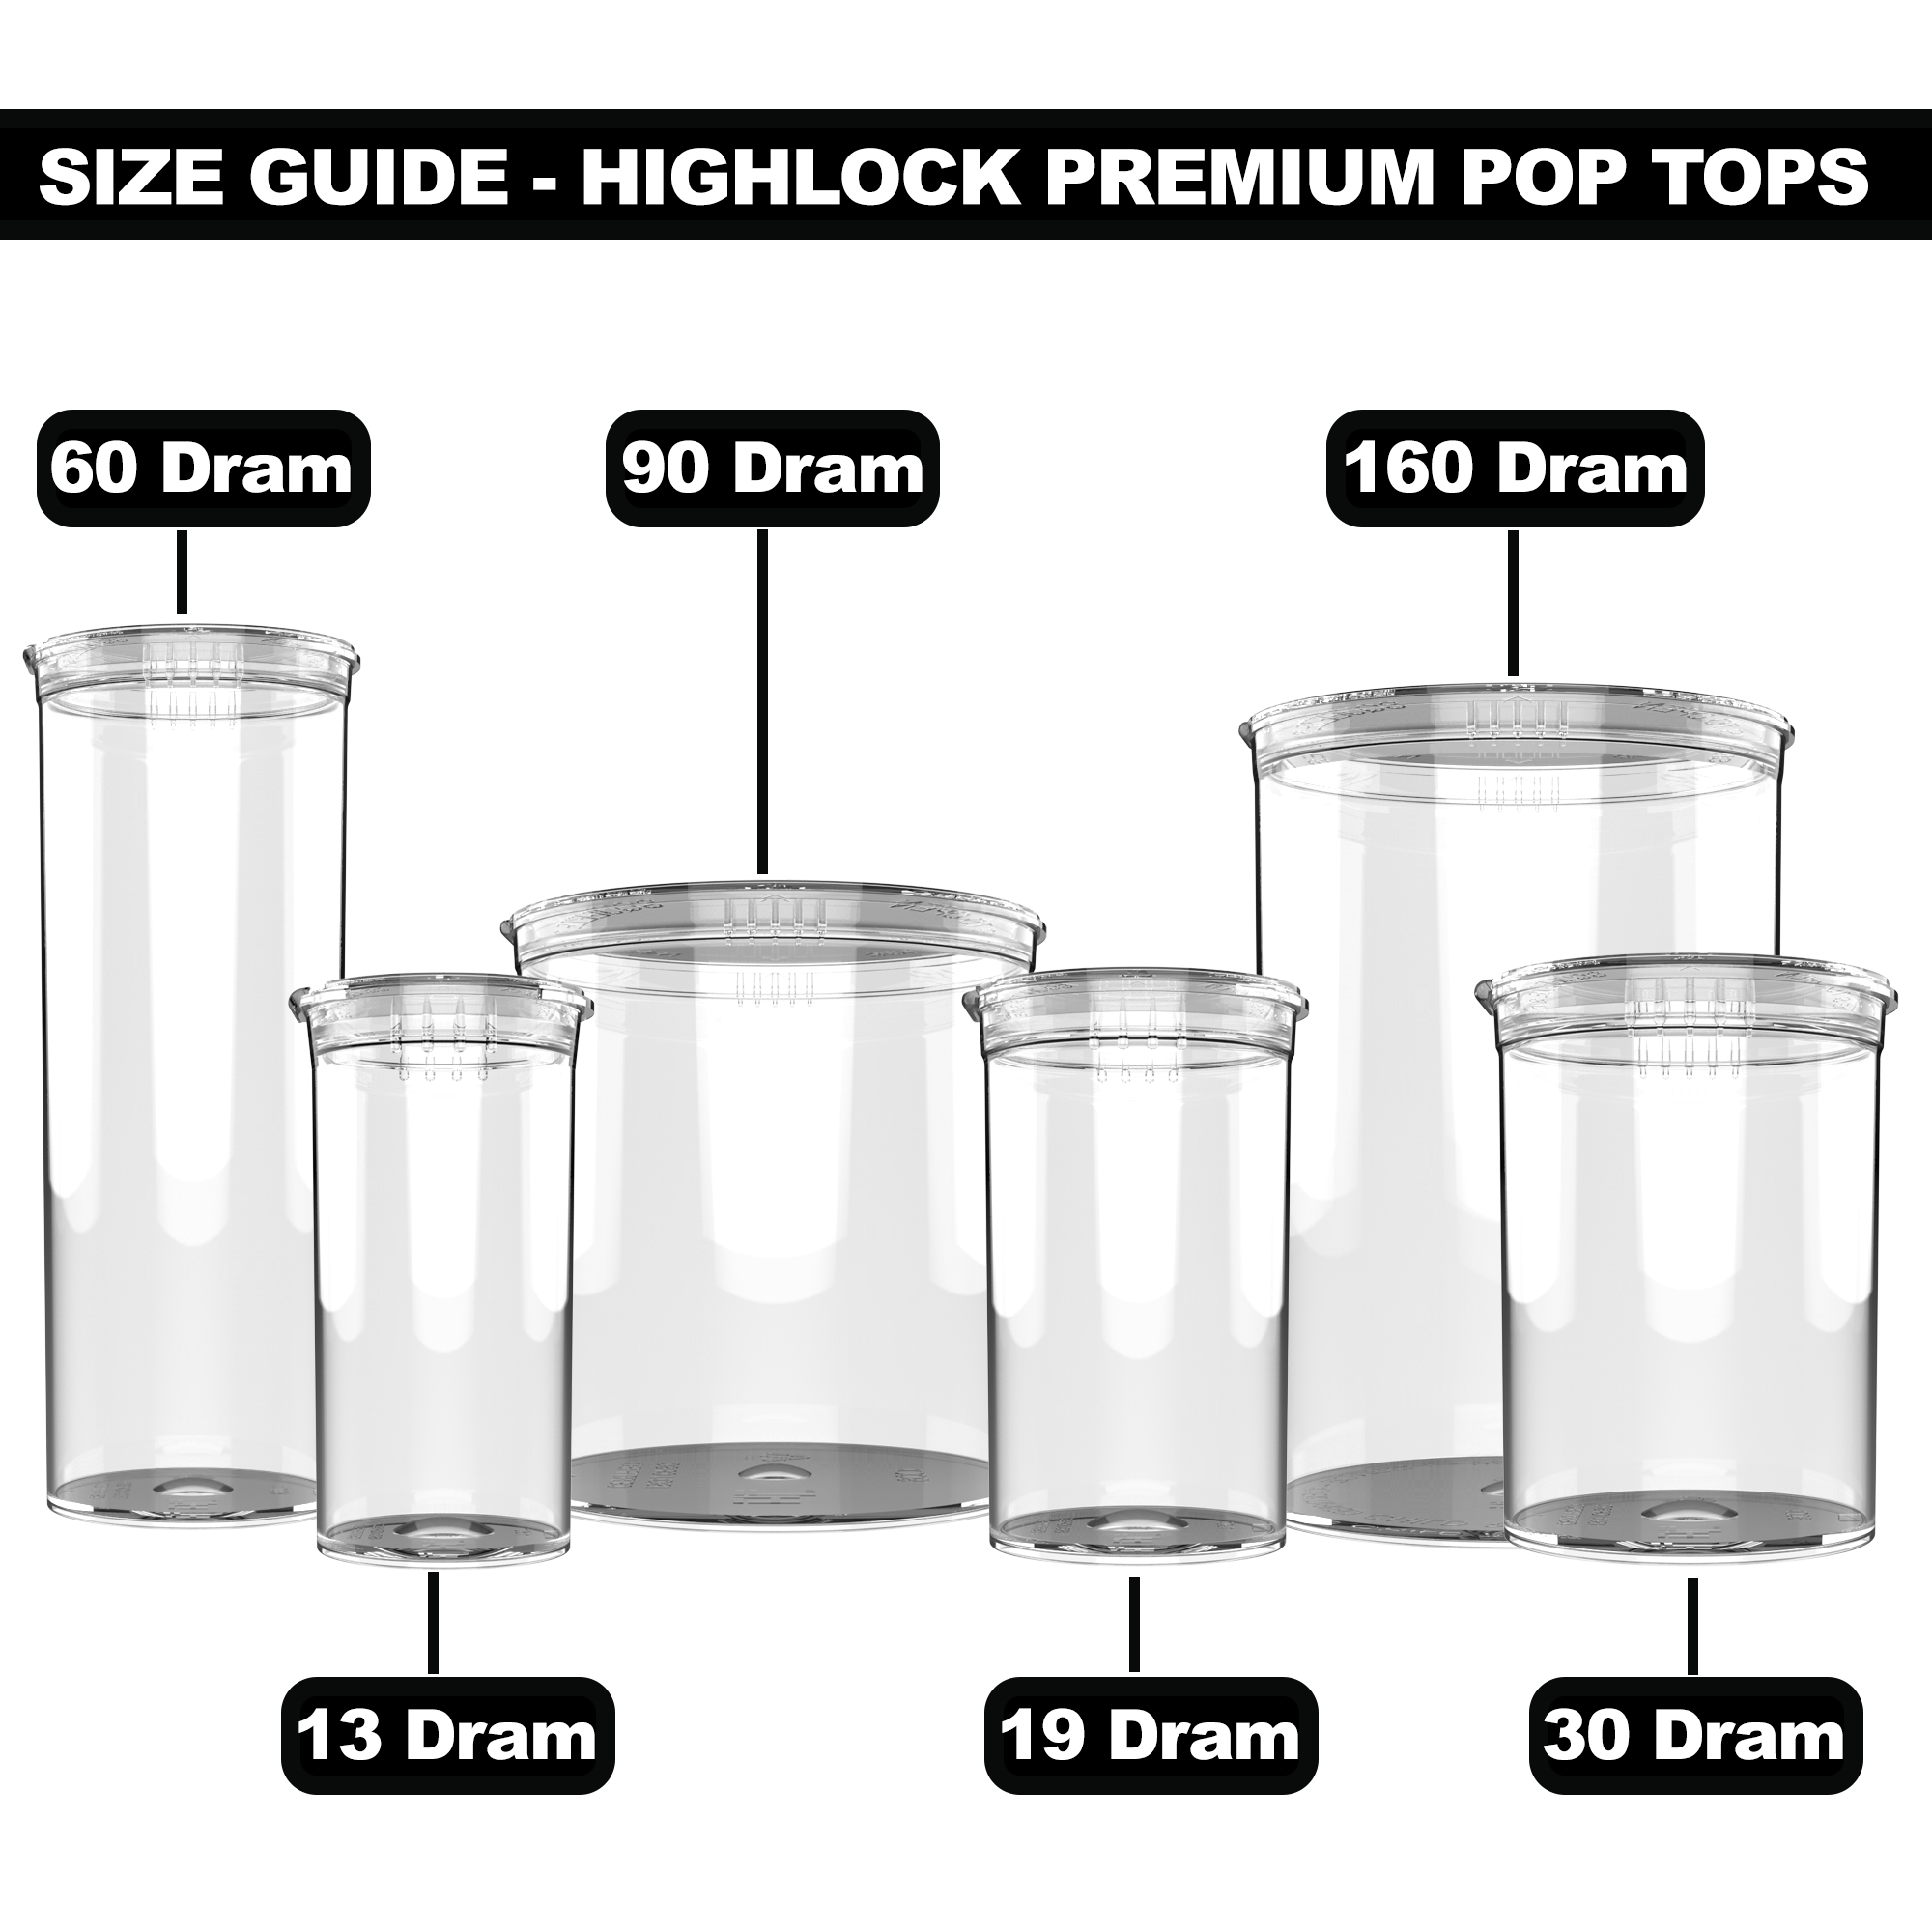 11 Dram Child-Resistant Pop-Top Jars - 450 Count